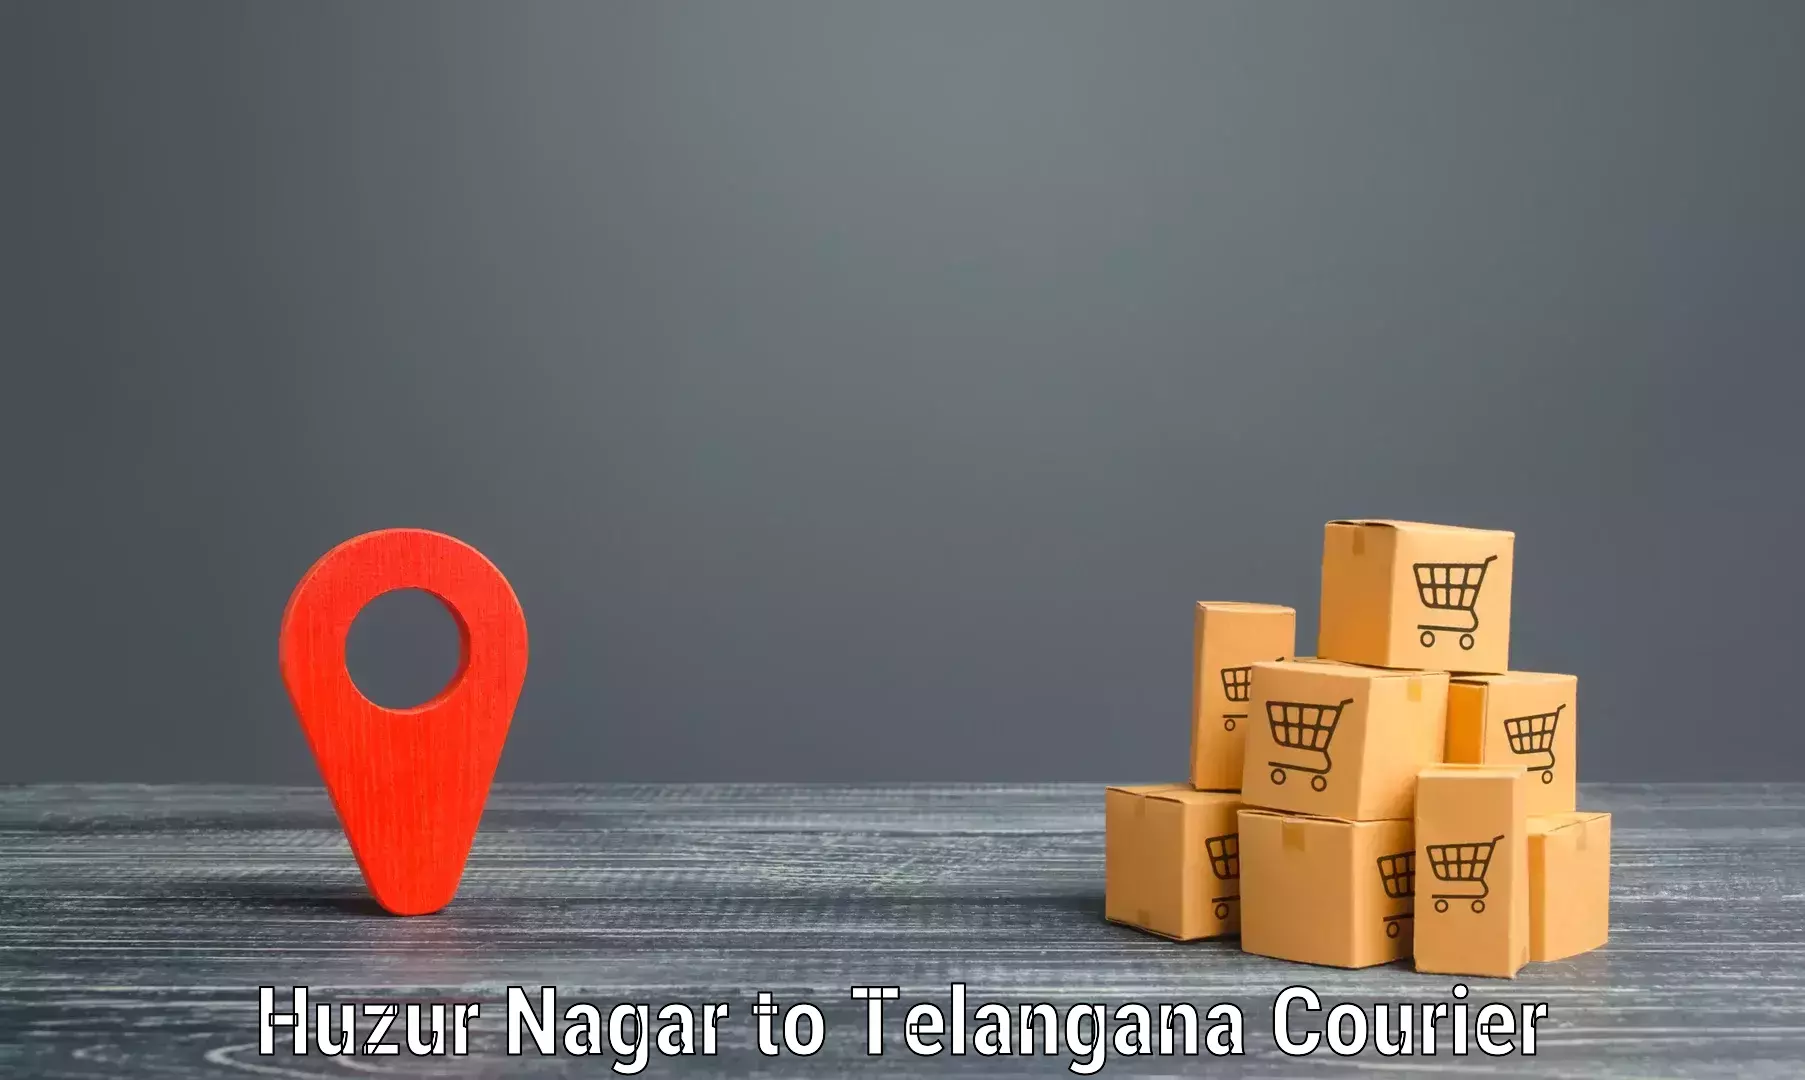 International parcel service Huzur Nagar to Rangareddy